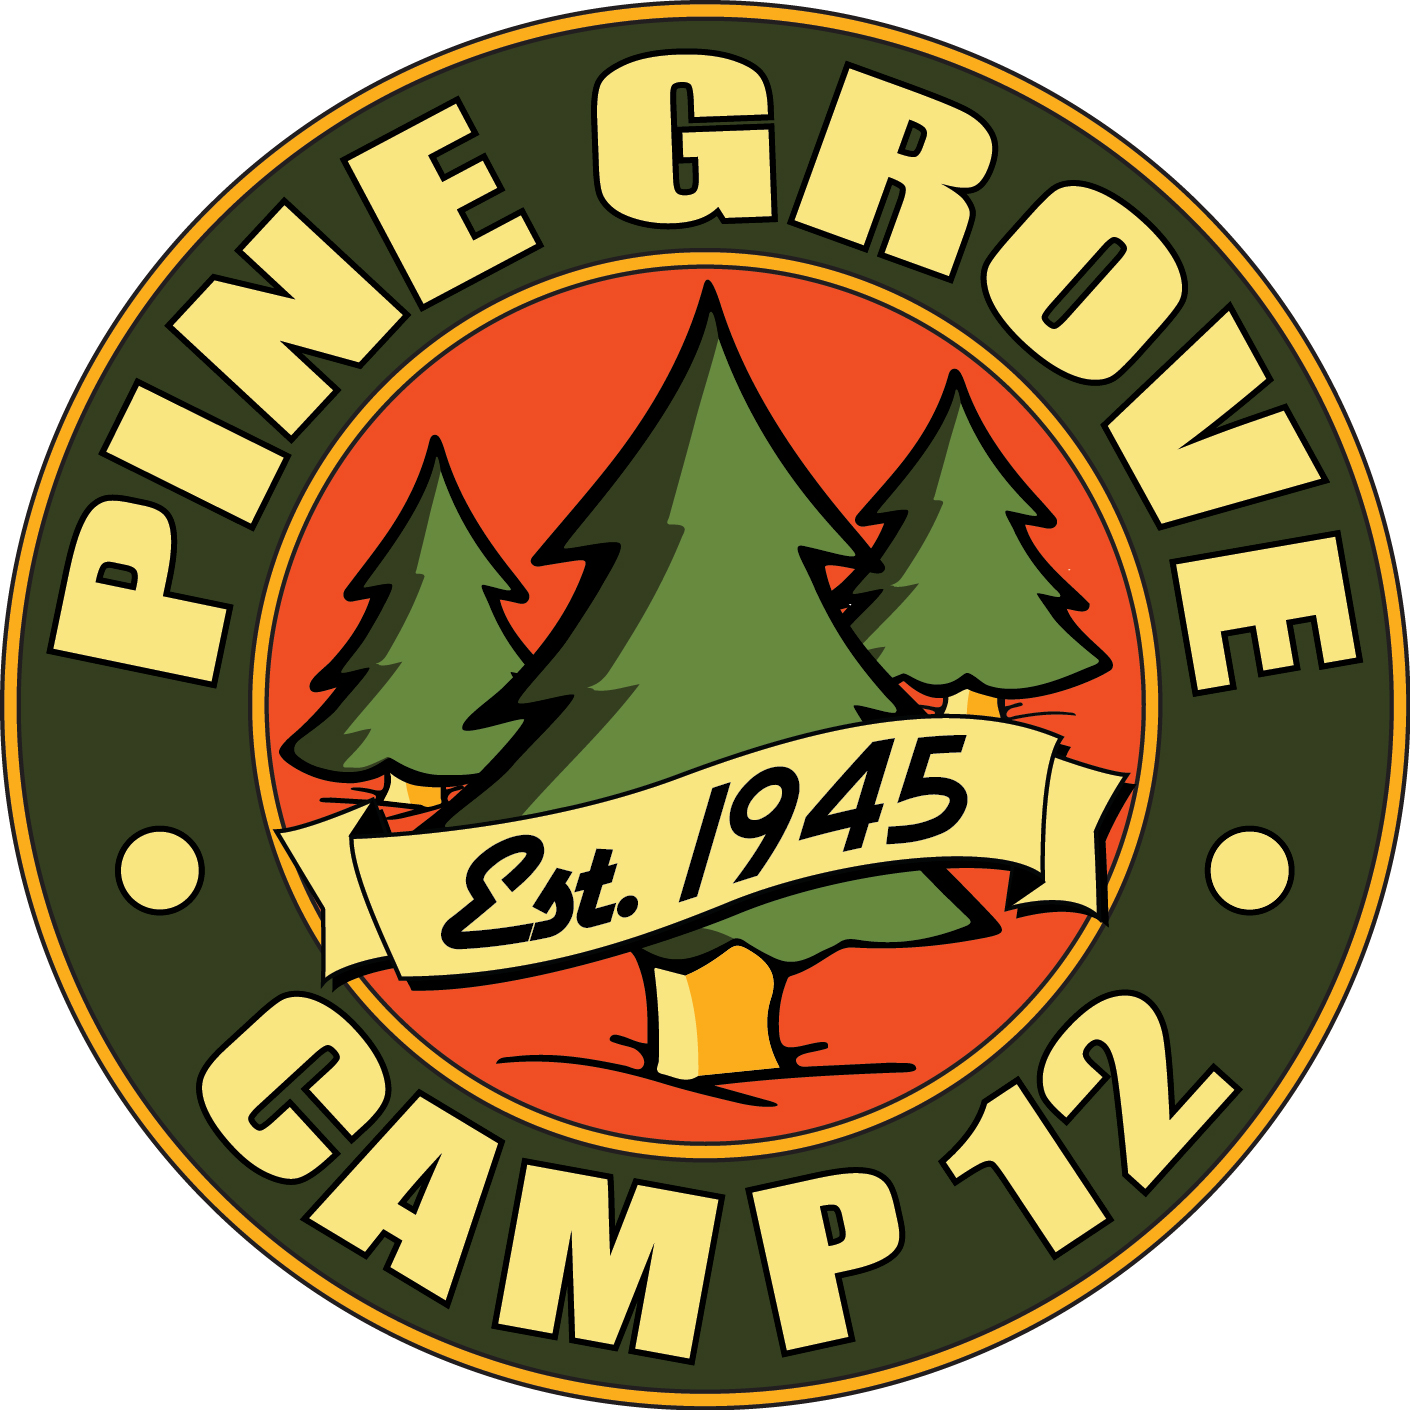 camp logo